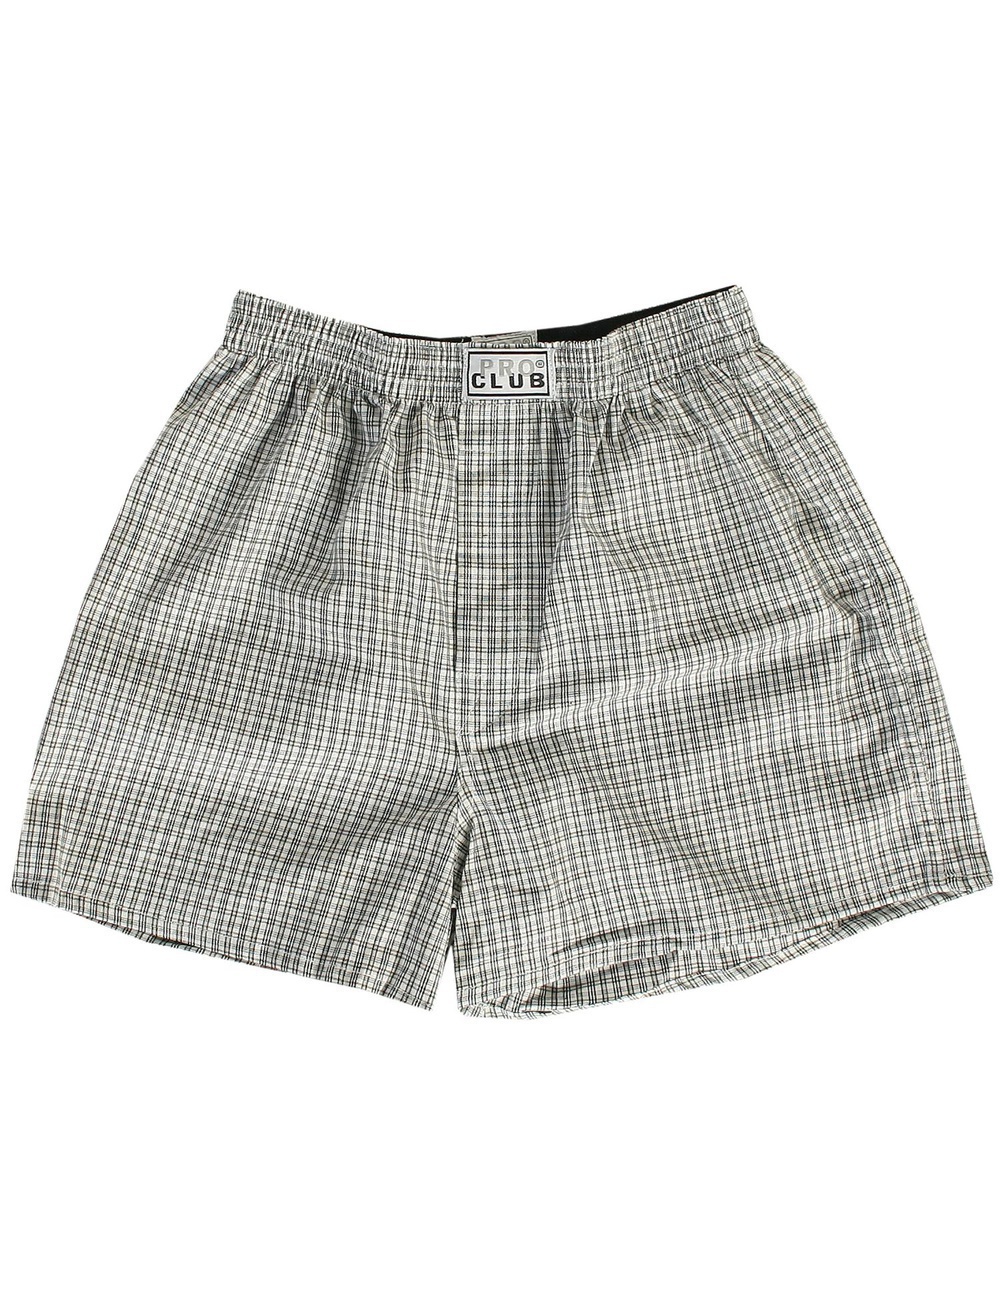 272-3 COLOR MIX Pro Club Boy's Boxer Trunks (3 Pack) - Underwear